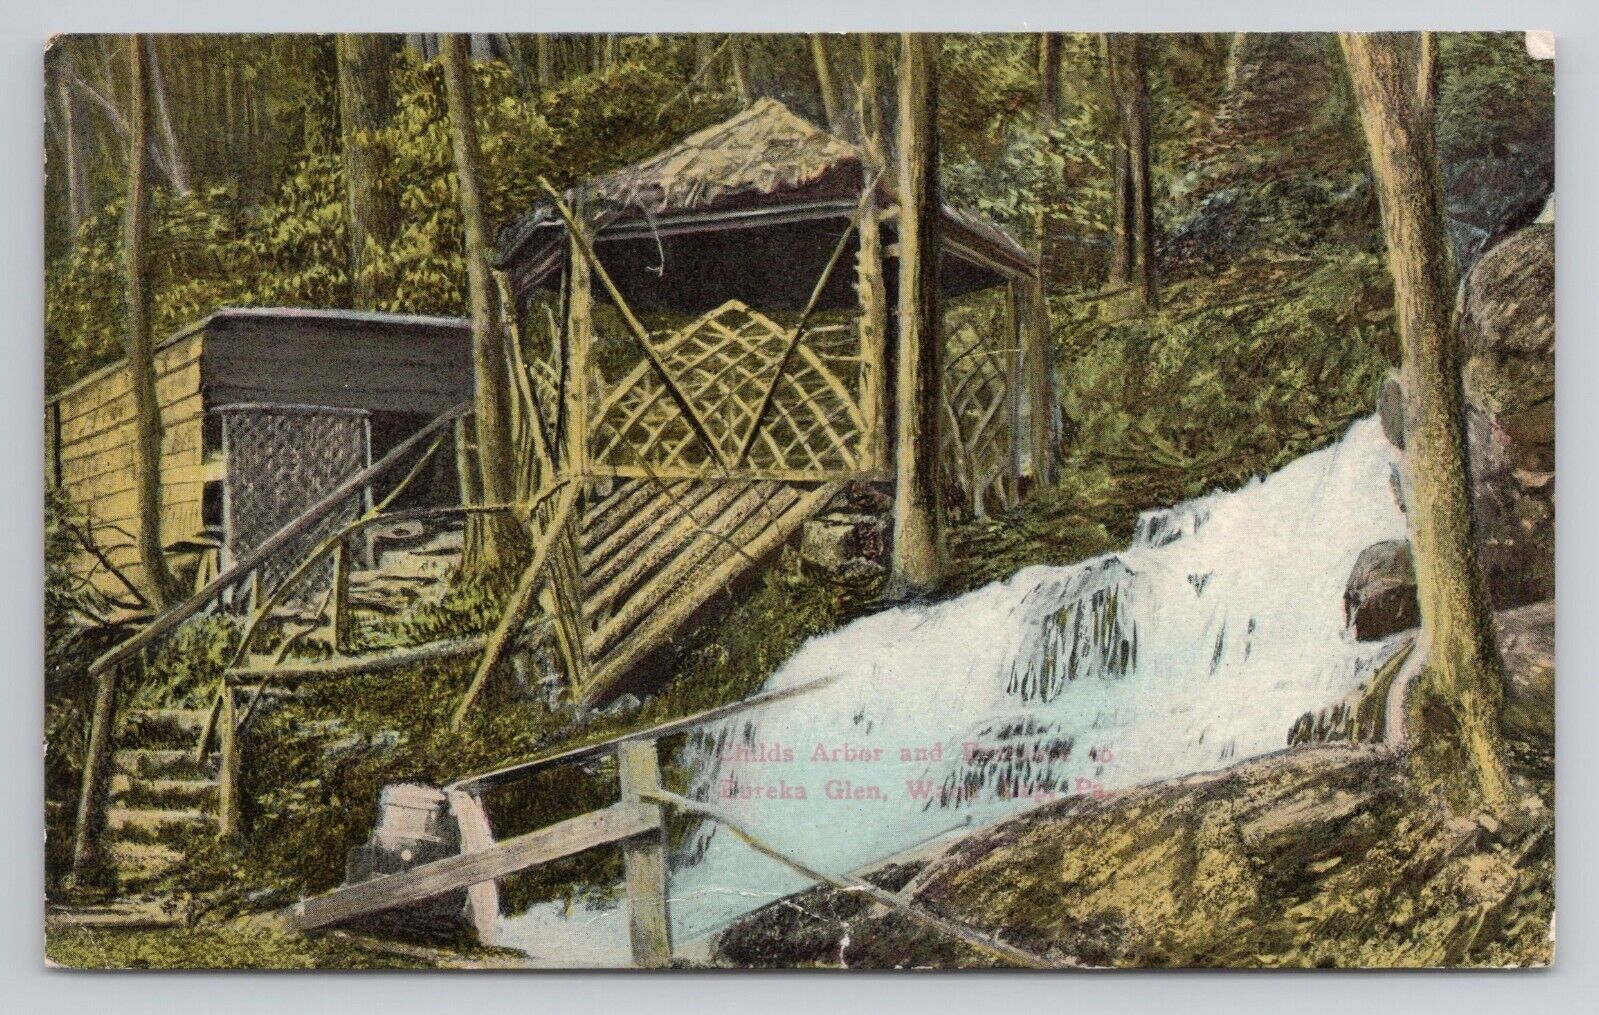 Childs Arbor Delaware Water Gap Pennsylvania 1915 Antique Postcard